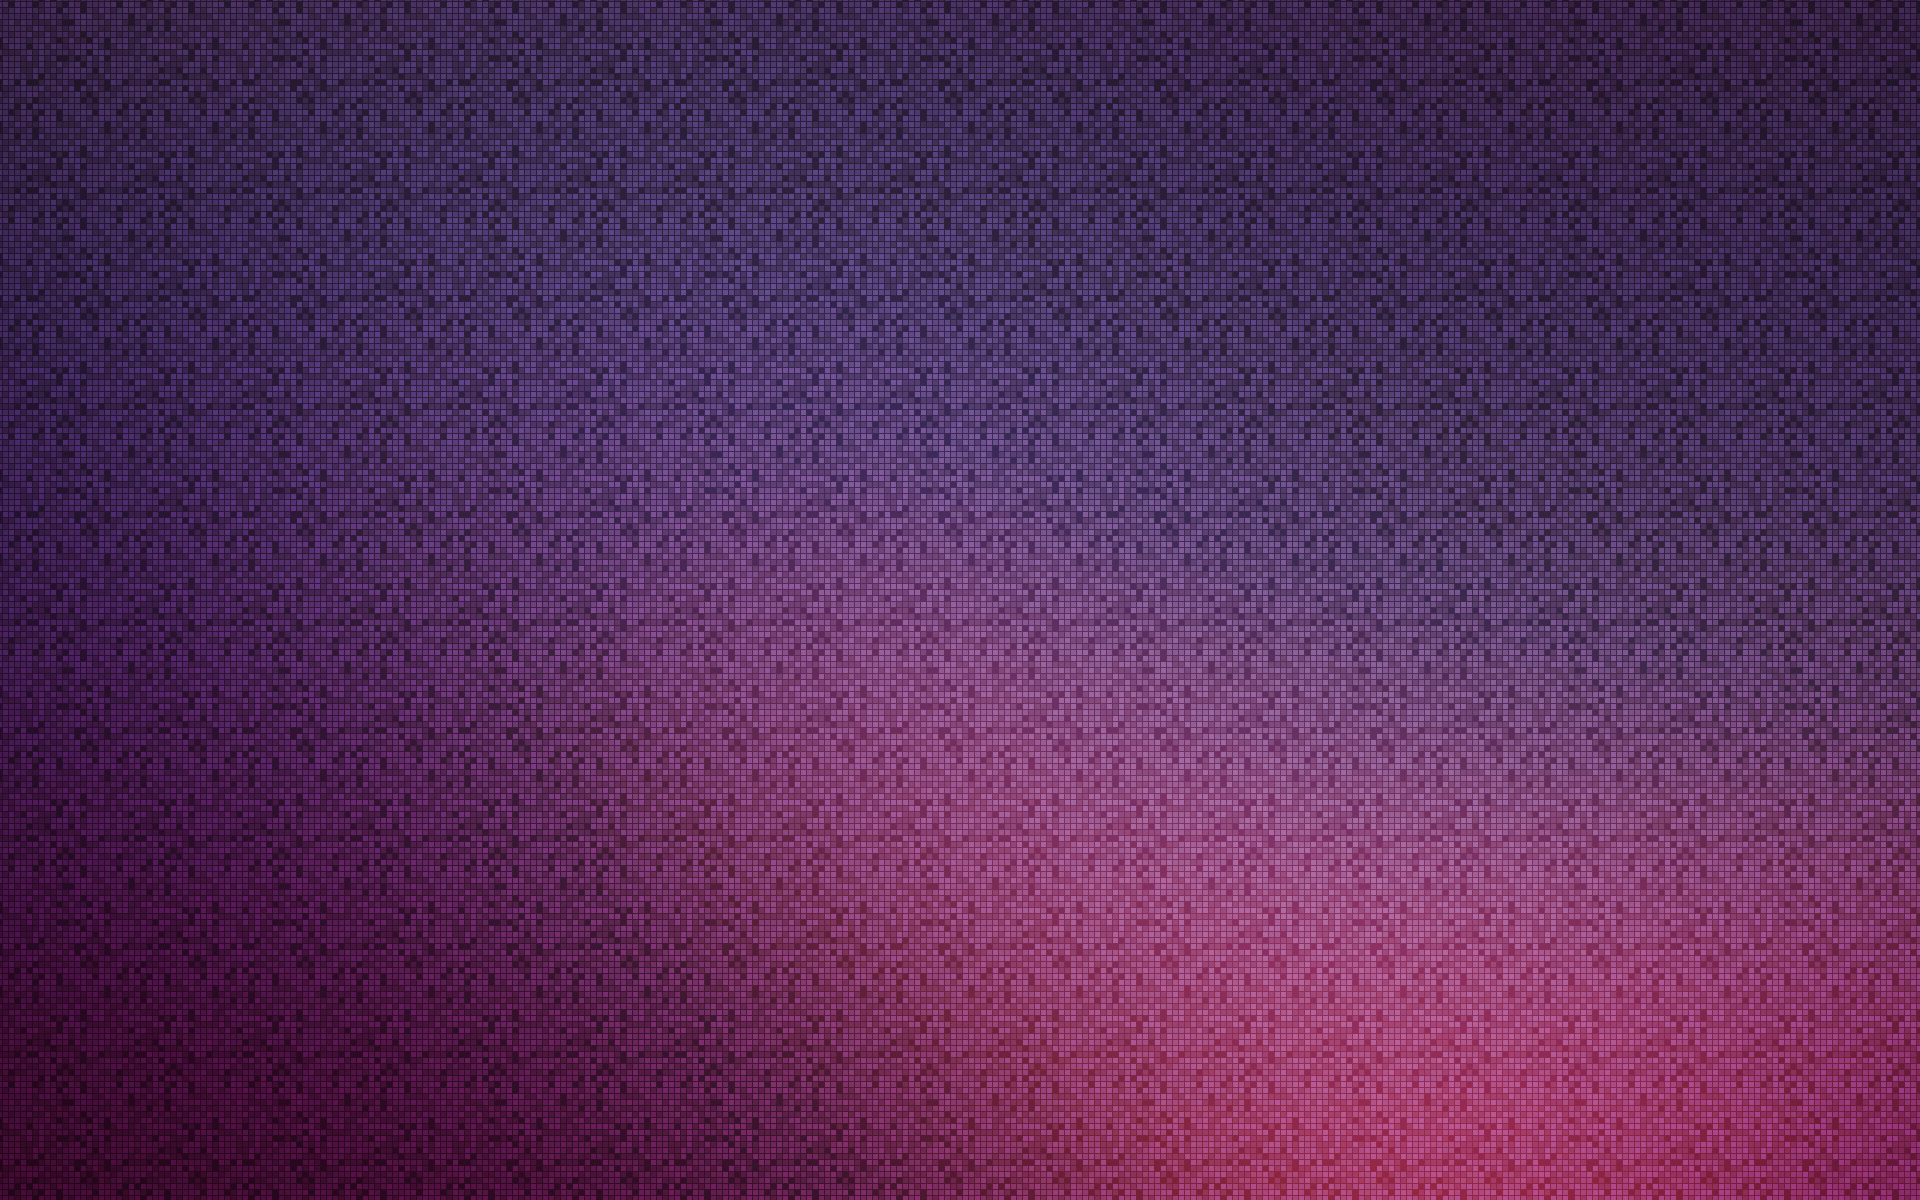 Wallpaper Background Matrix Grape Pixel Filter